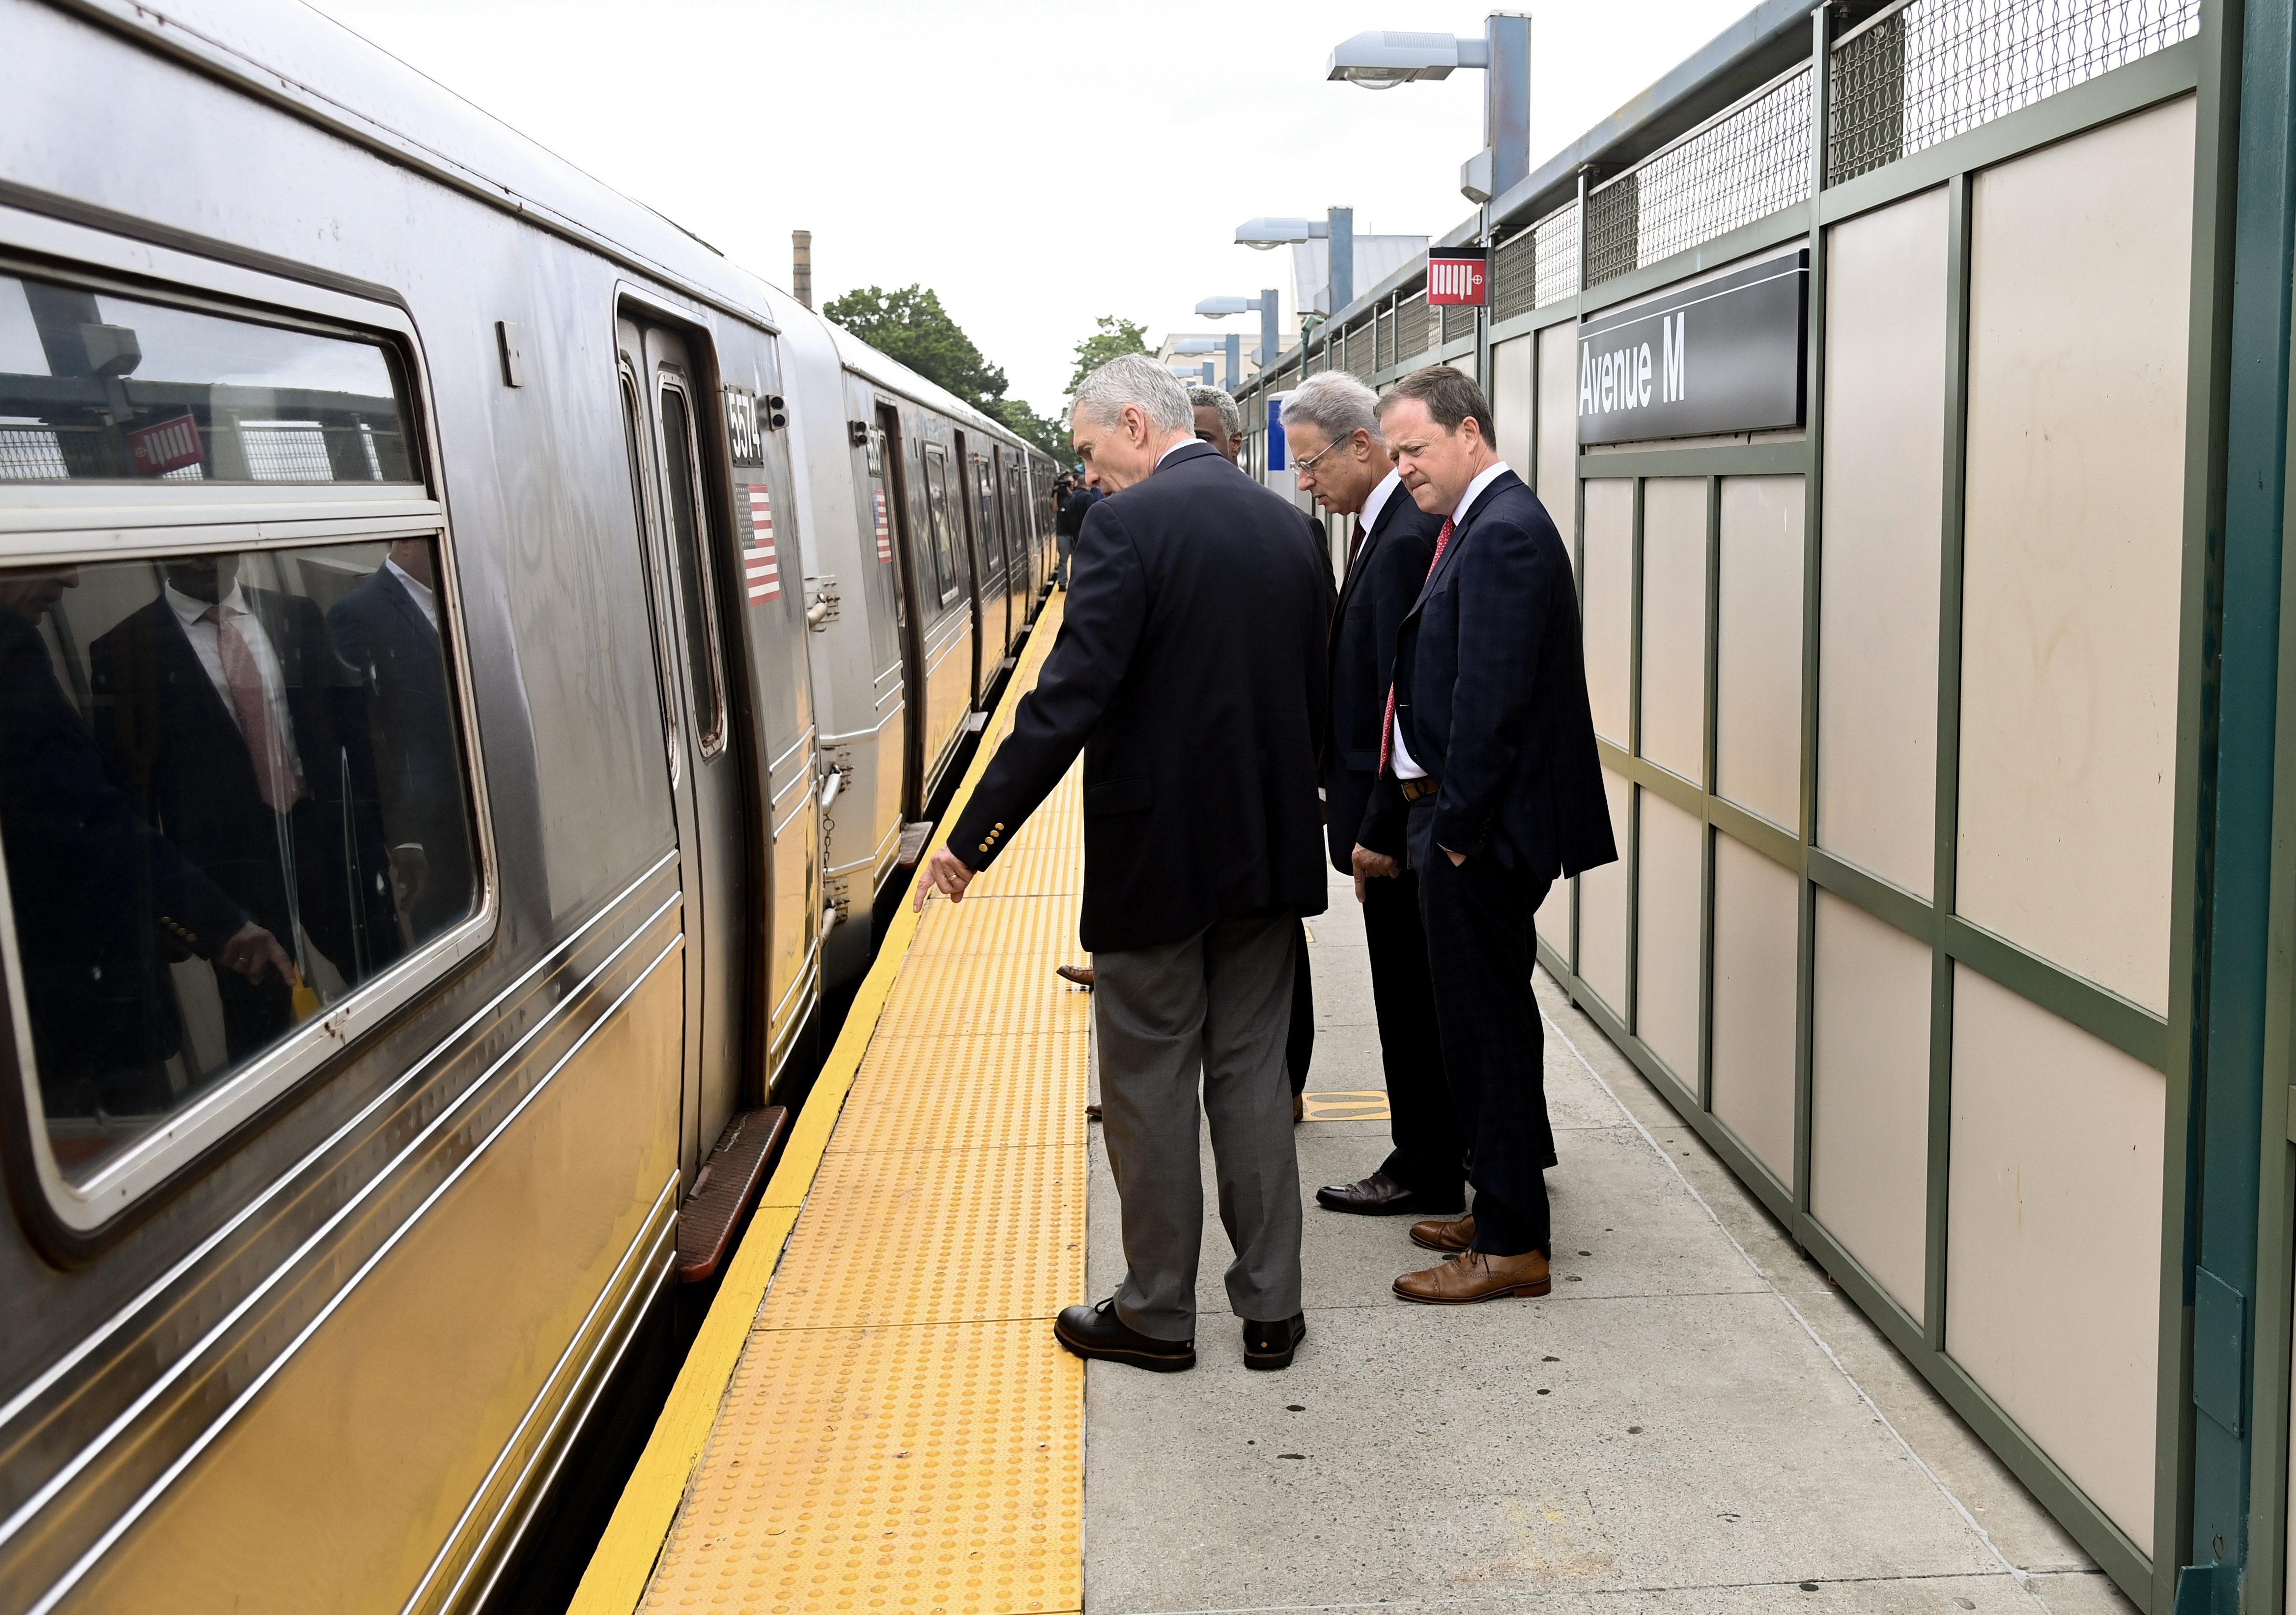 PHOTOS: MTA Leadership Visit Avenue M Subway Station in Brooklyn